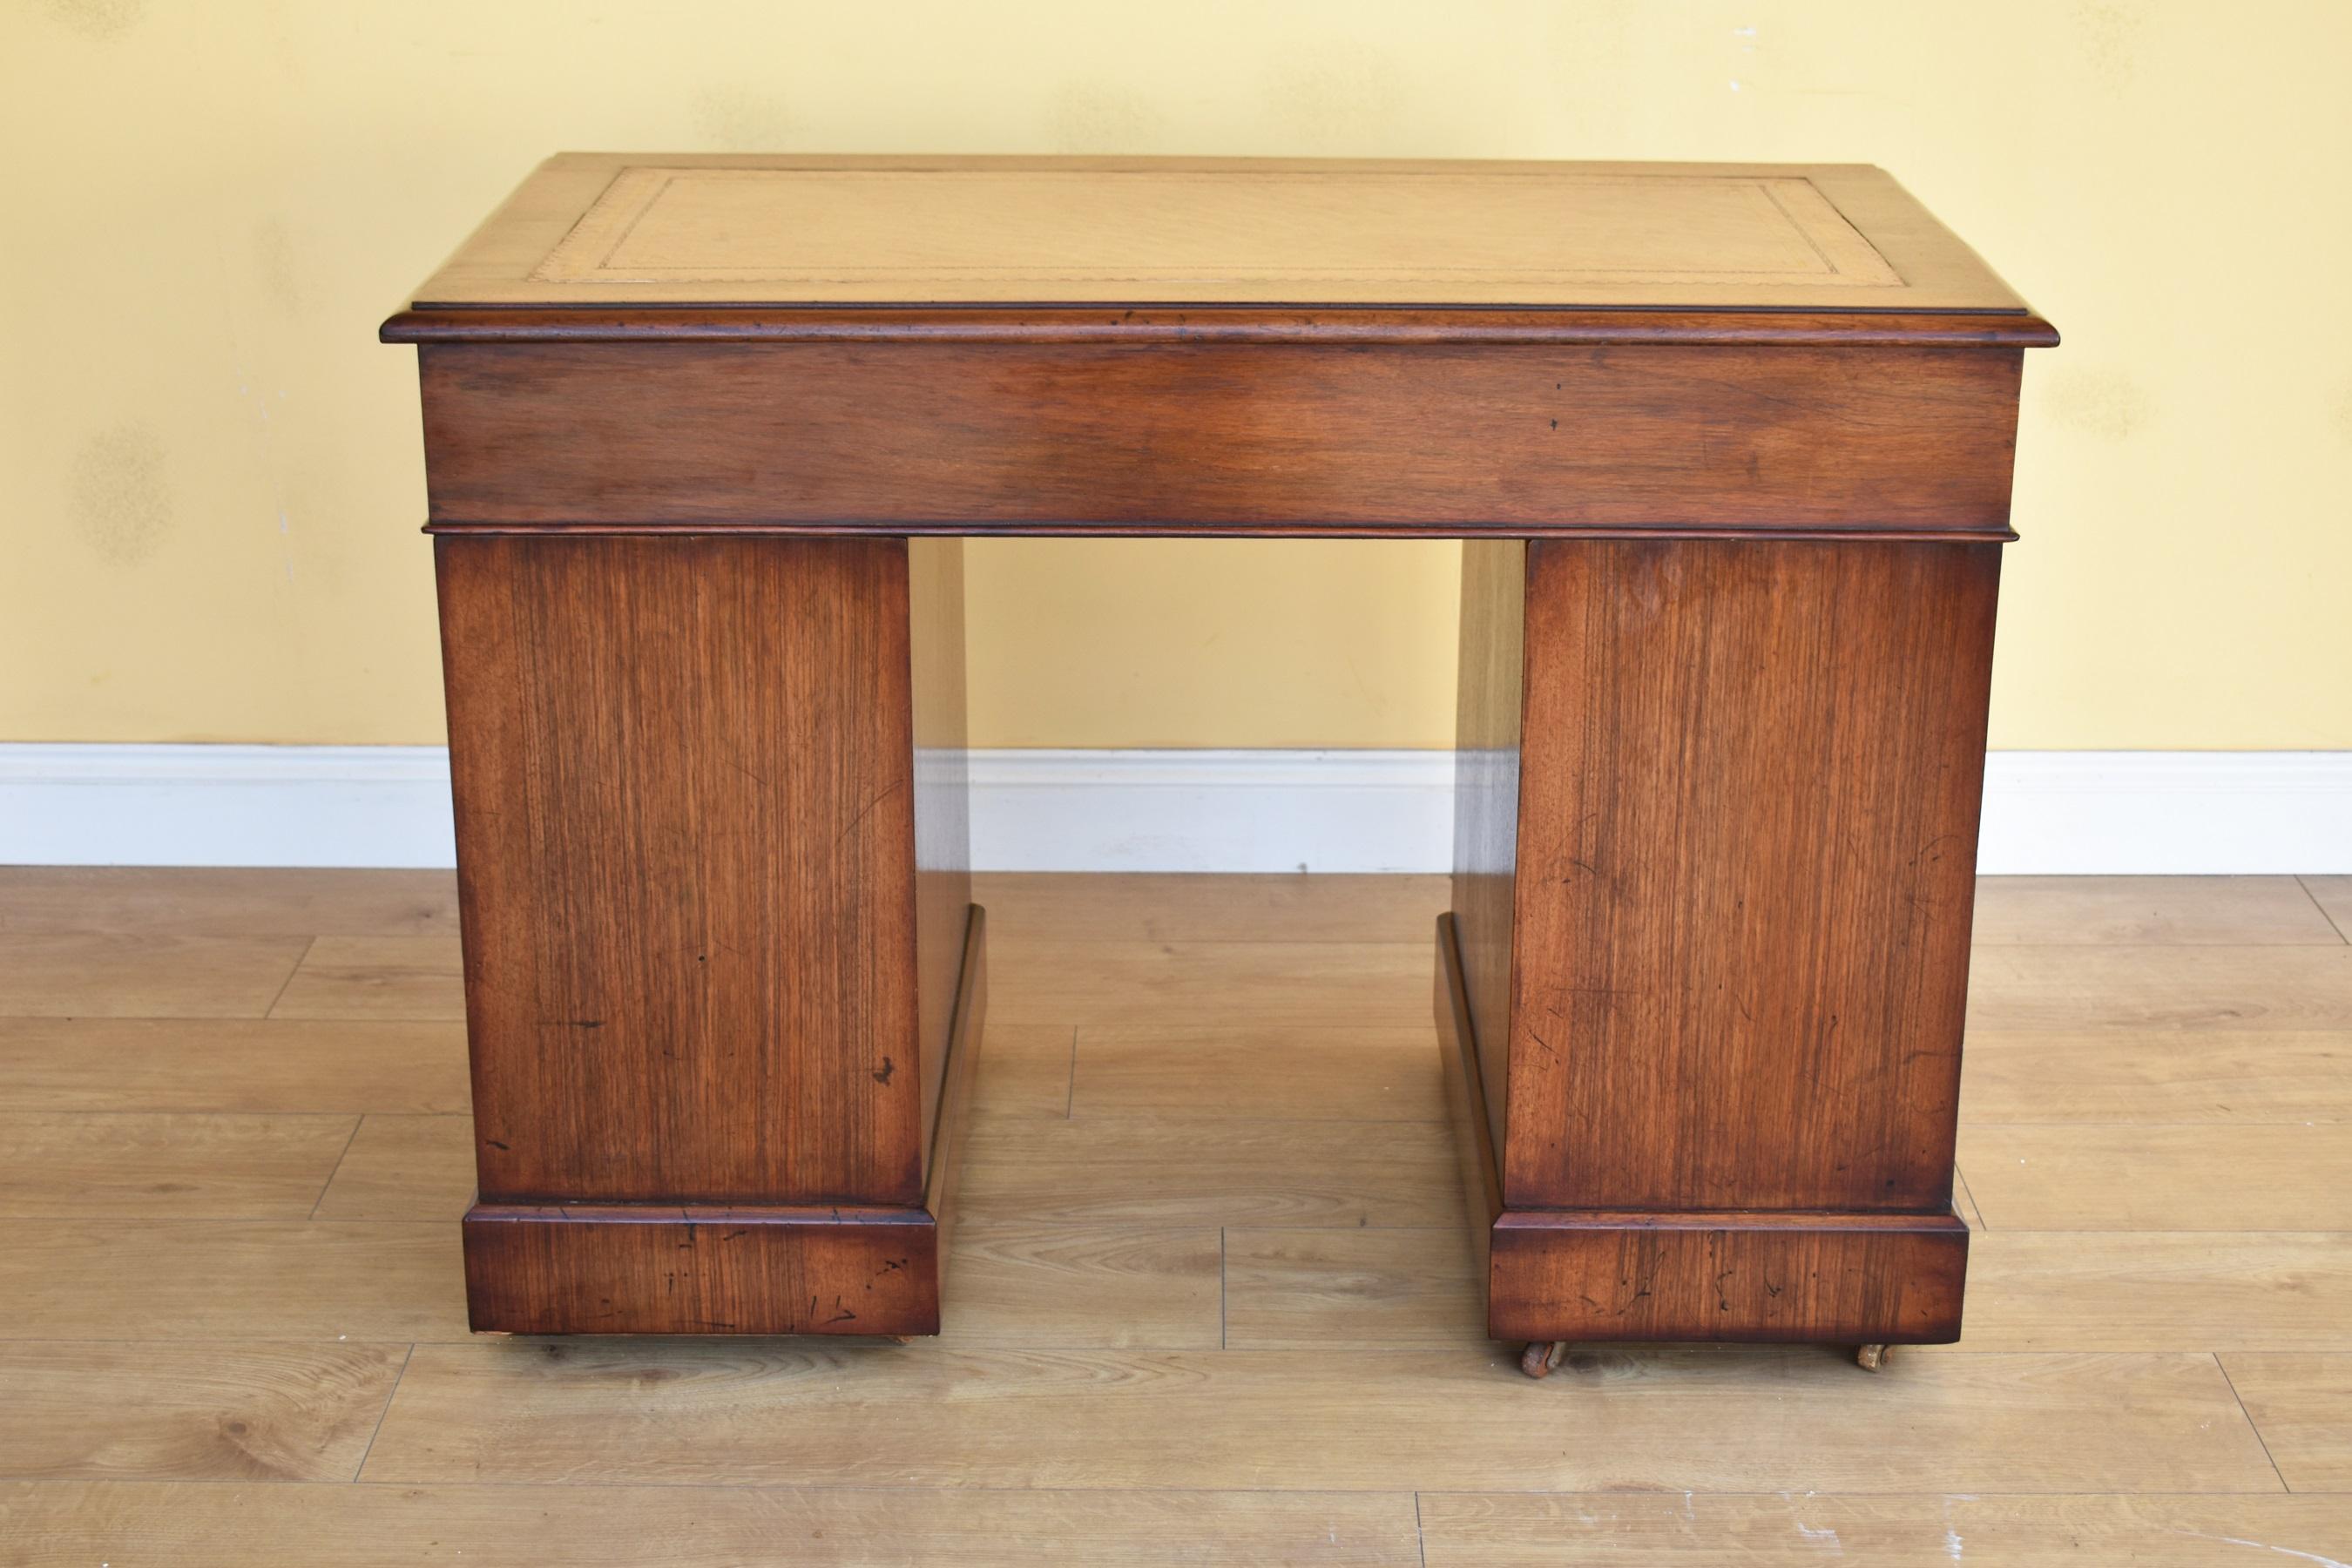 19th Century English Victorian Burr Walnut Pedestal Desk For Sale 4